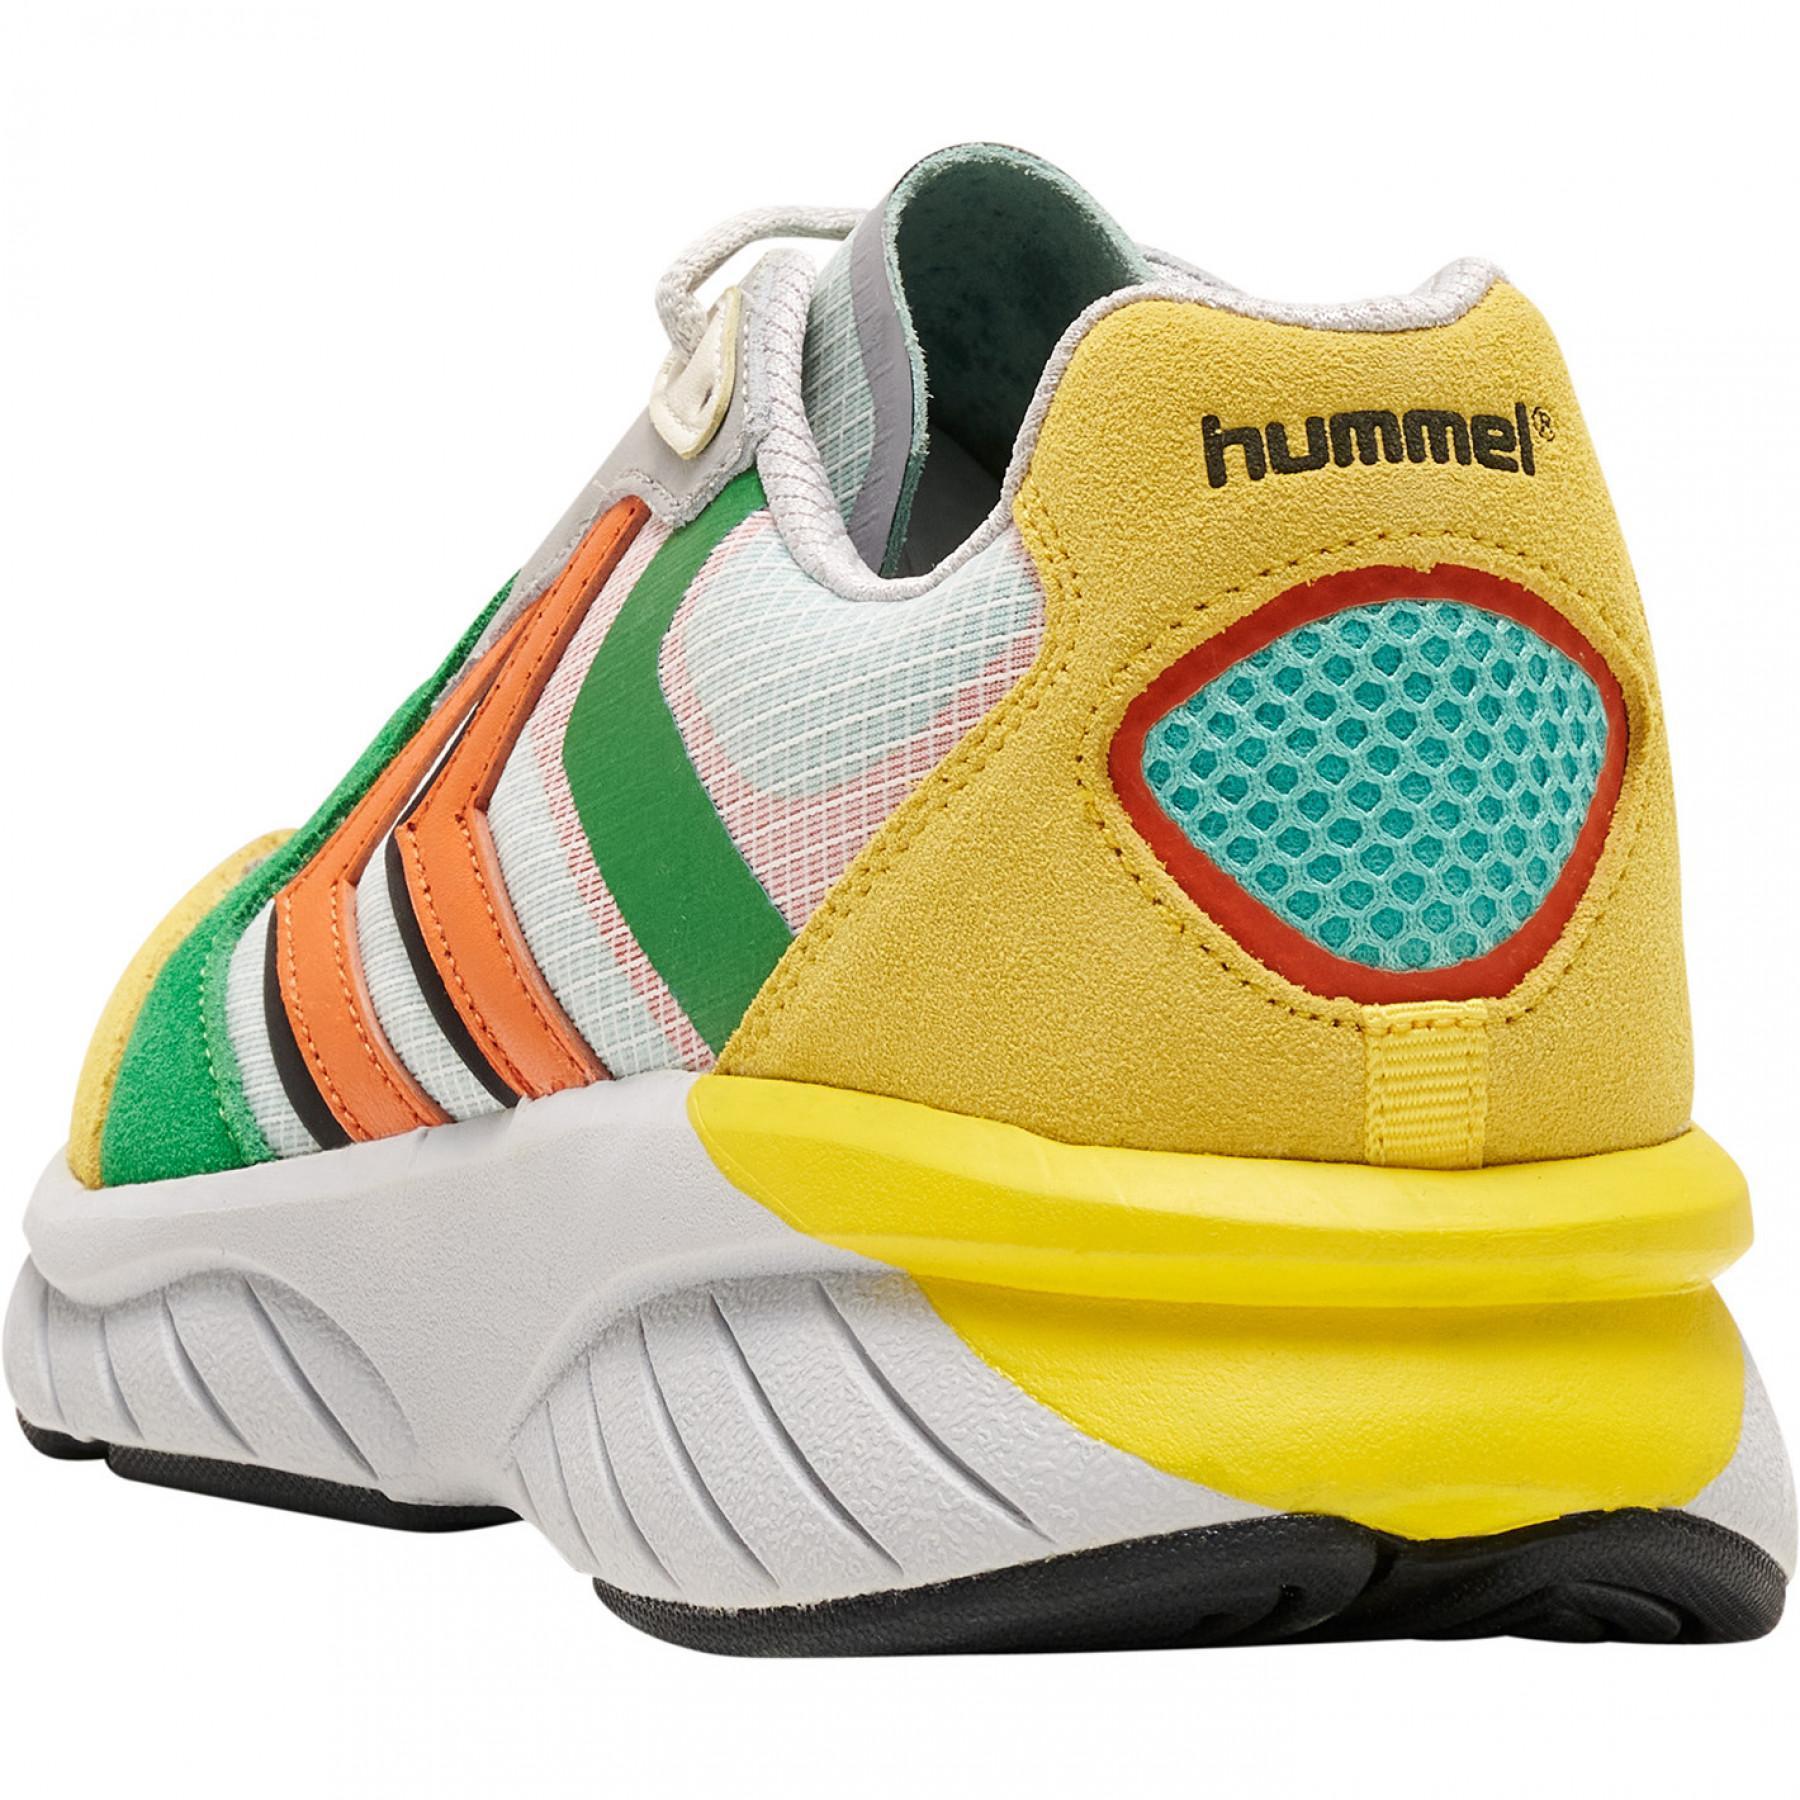 Shoes Hummel reach lx 6000